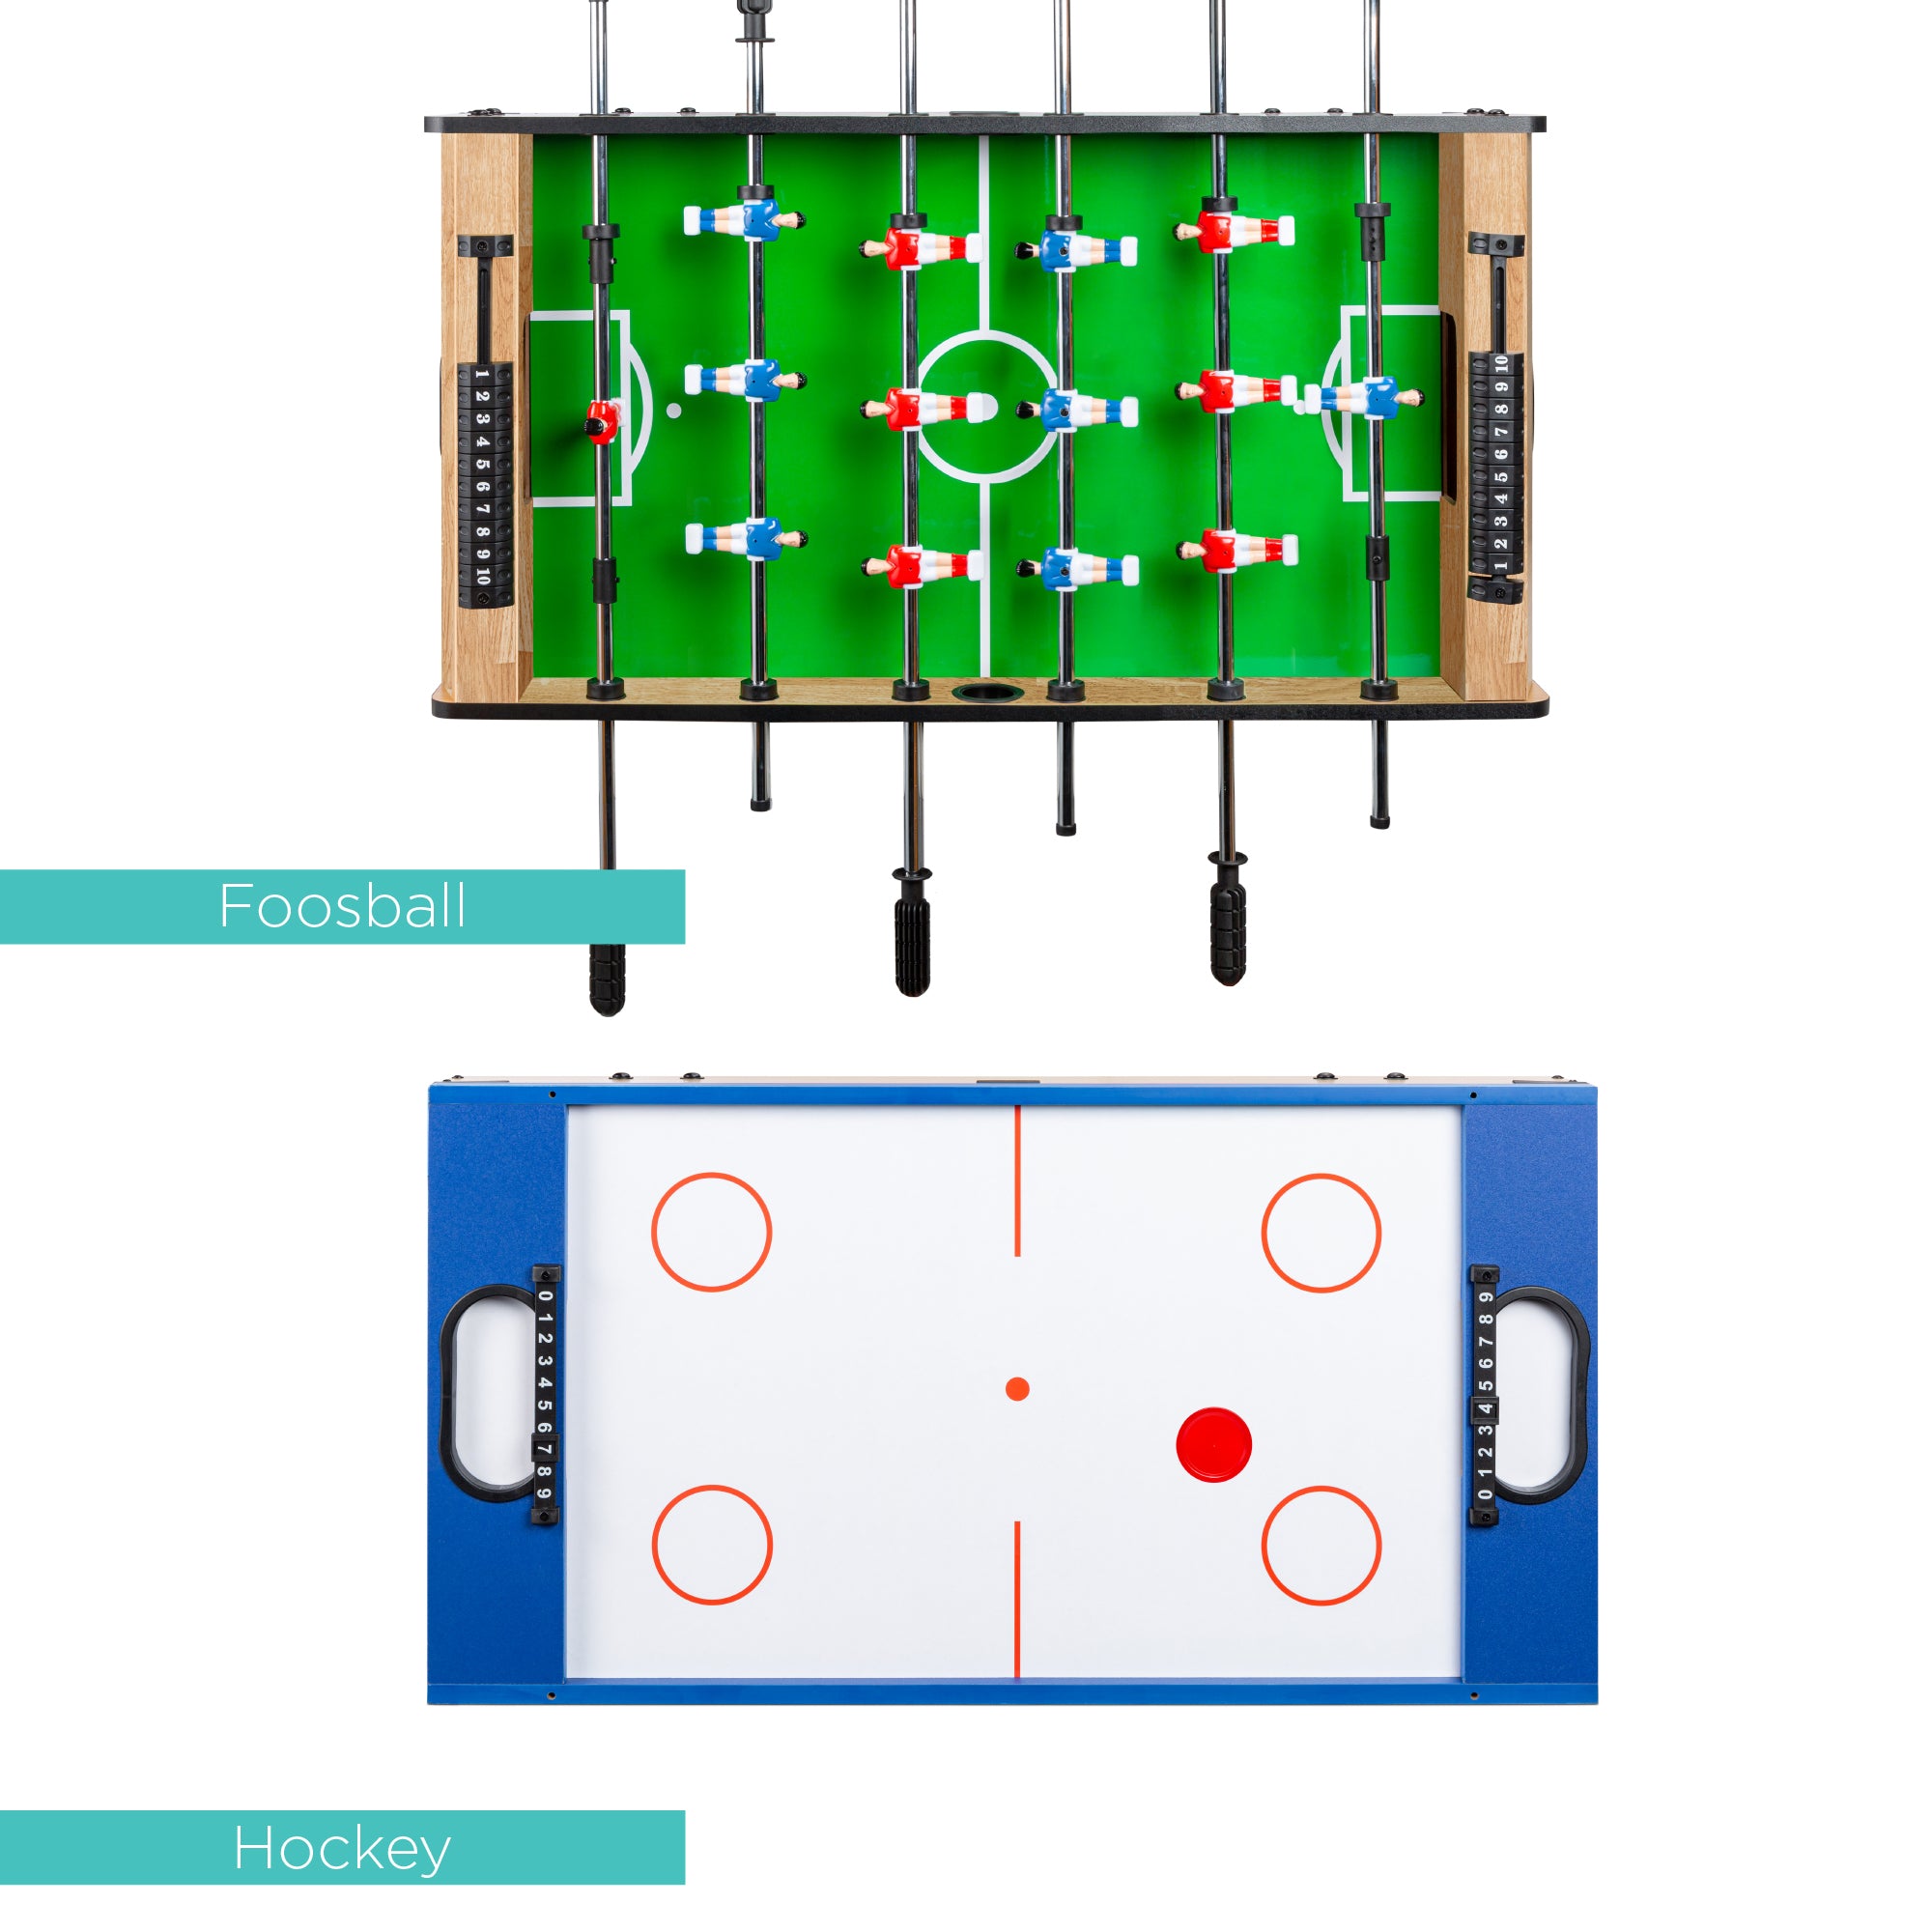 HOMCOM Table multi jeux 4 en 1 babyfoot billard air hockey ping-pong avec  accessoires MDF bois 87 x 43 x 73 cm pas cher 